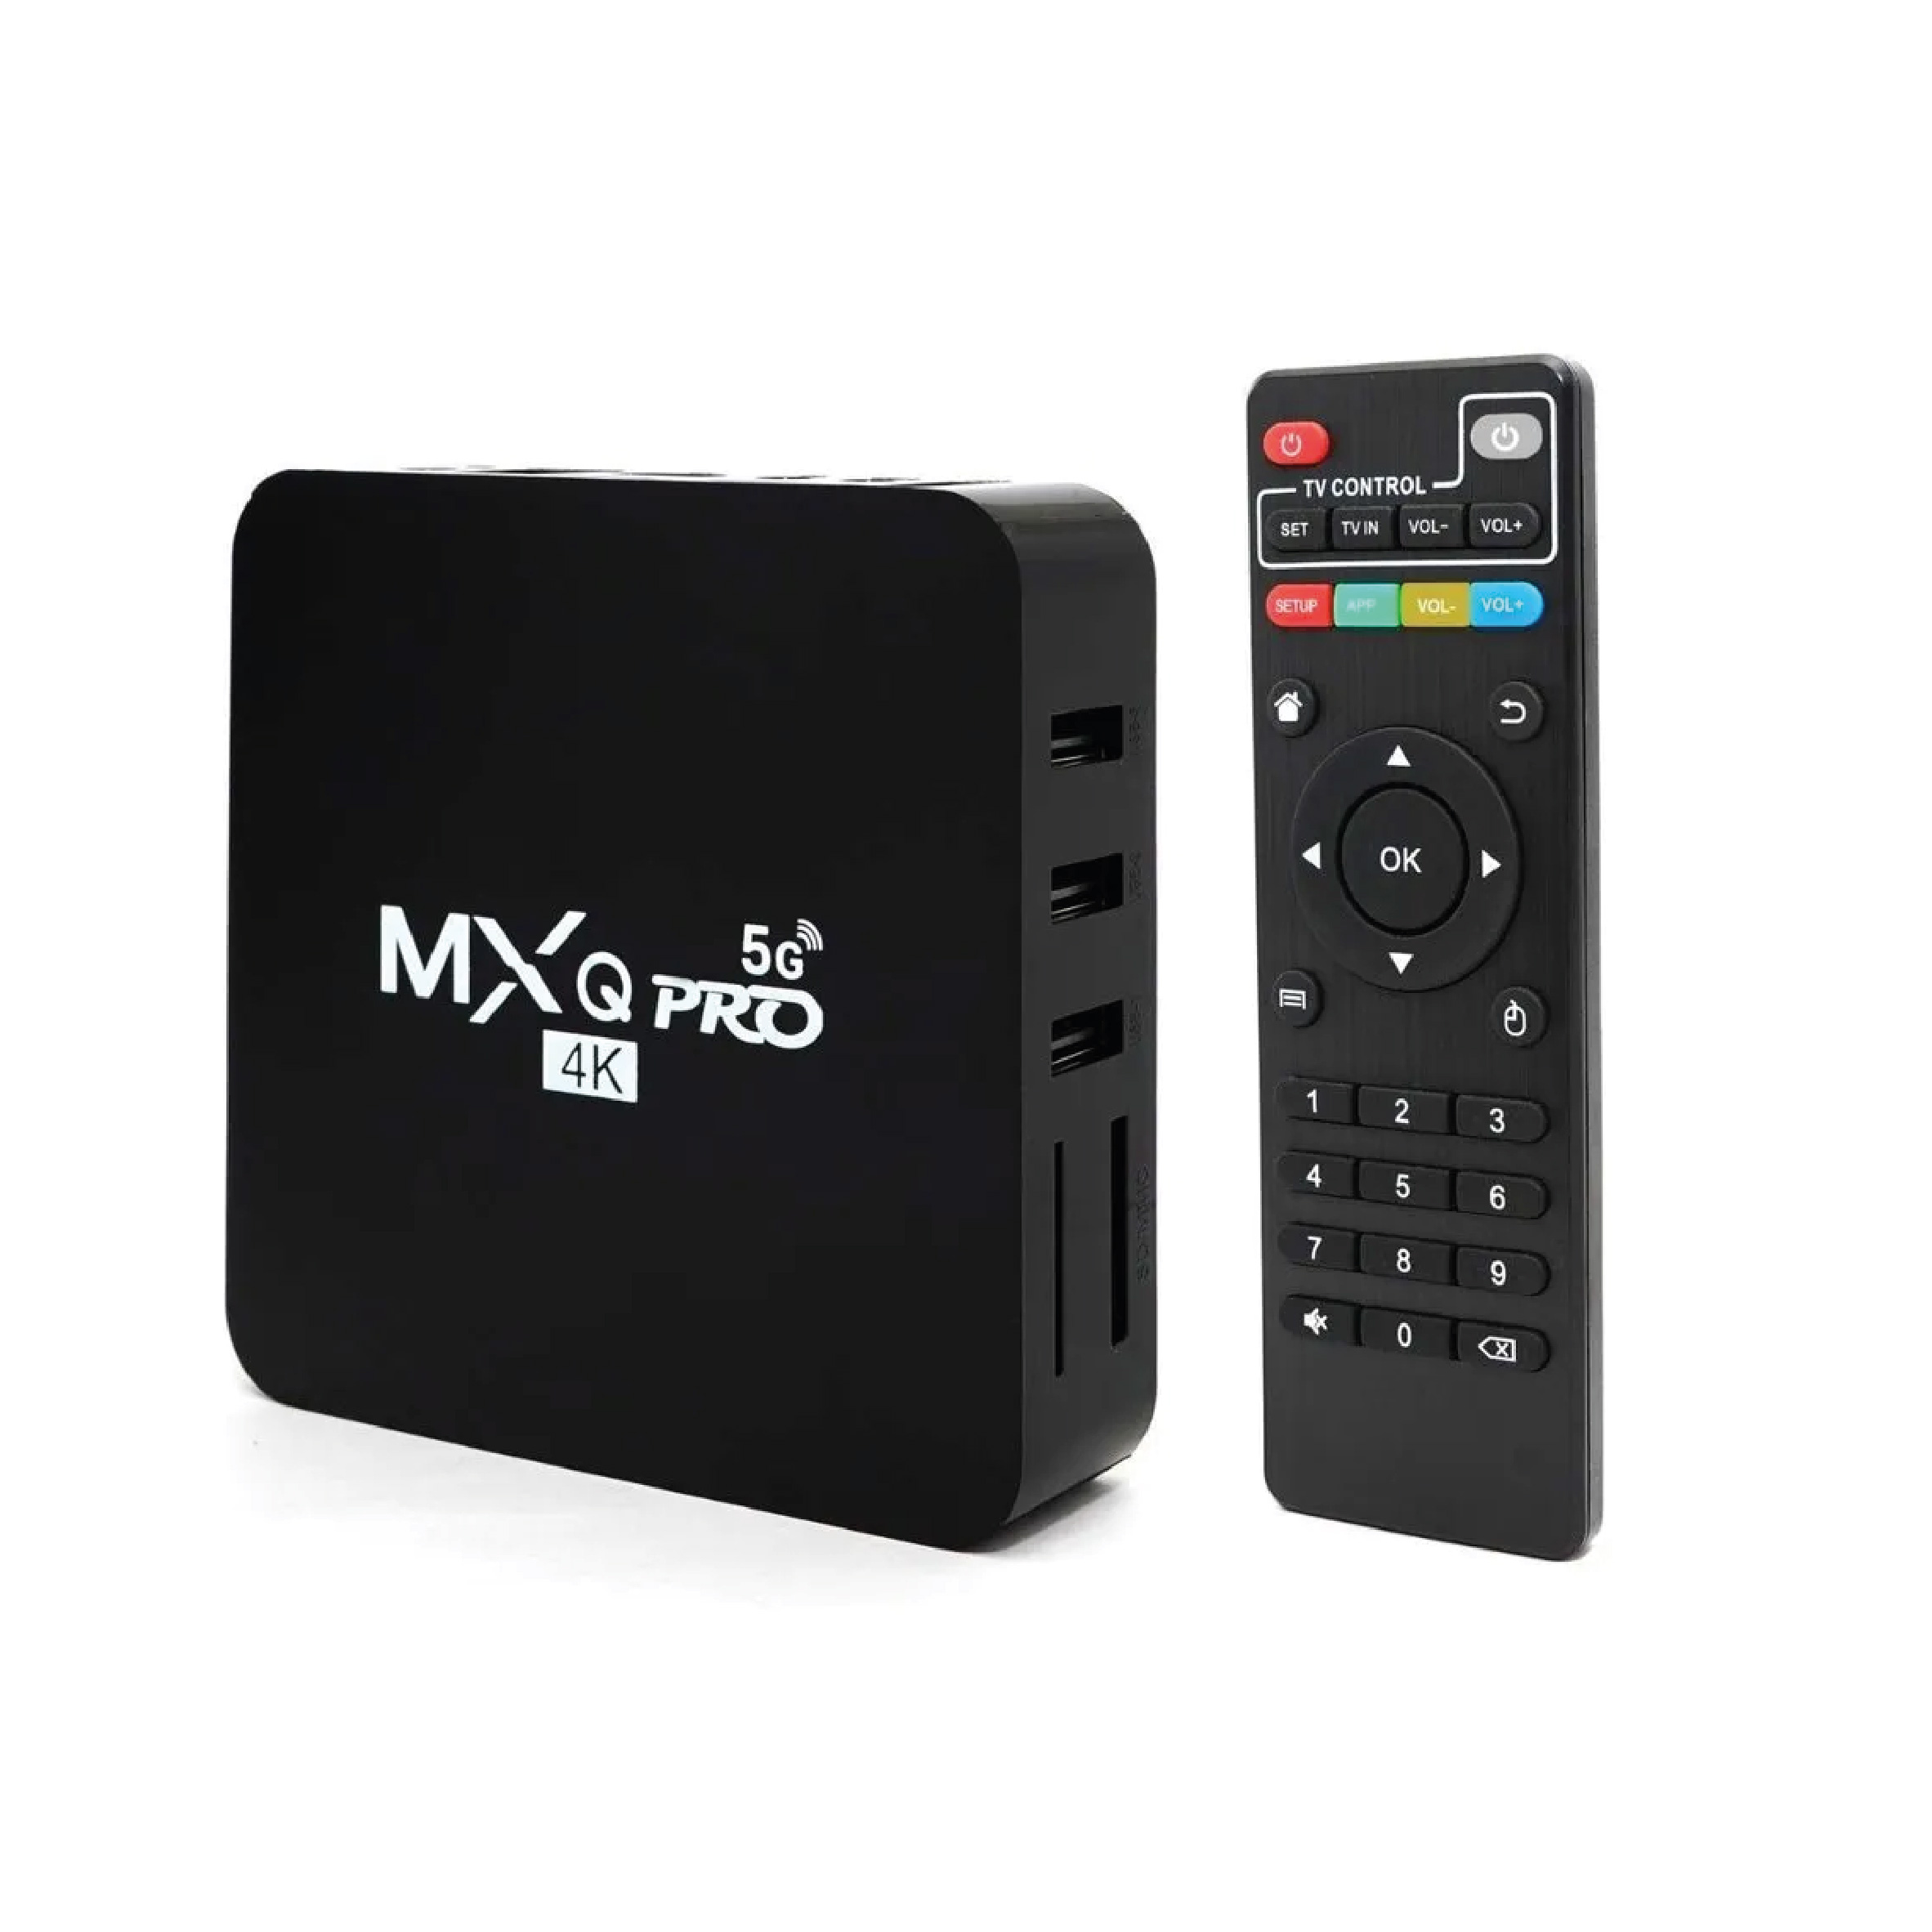 MXQ Pro Android TV Box 5G, 4K, CPU 64BIT, CPU 4 Core, 4K UHD, Hevc H.265, MXQPRO